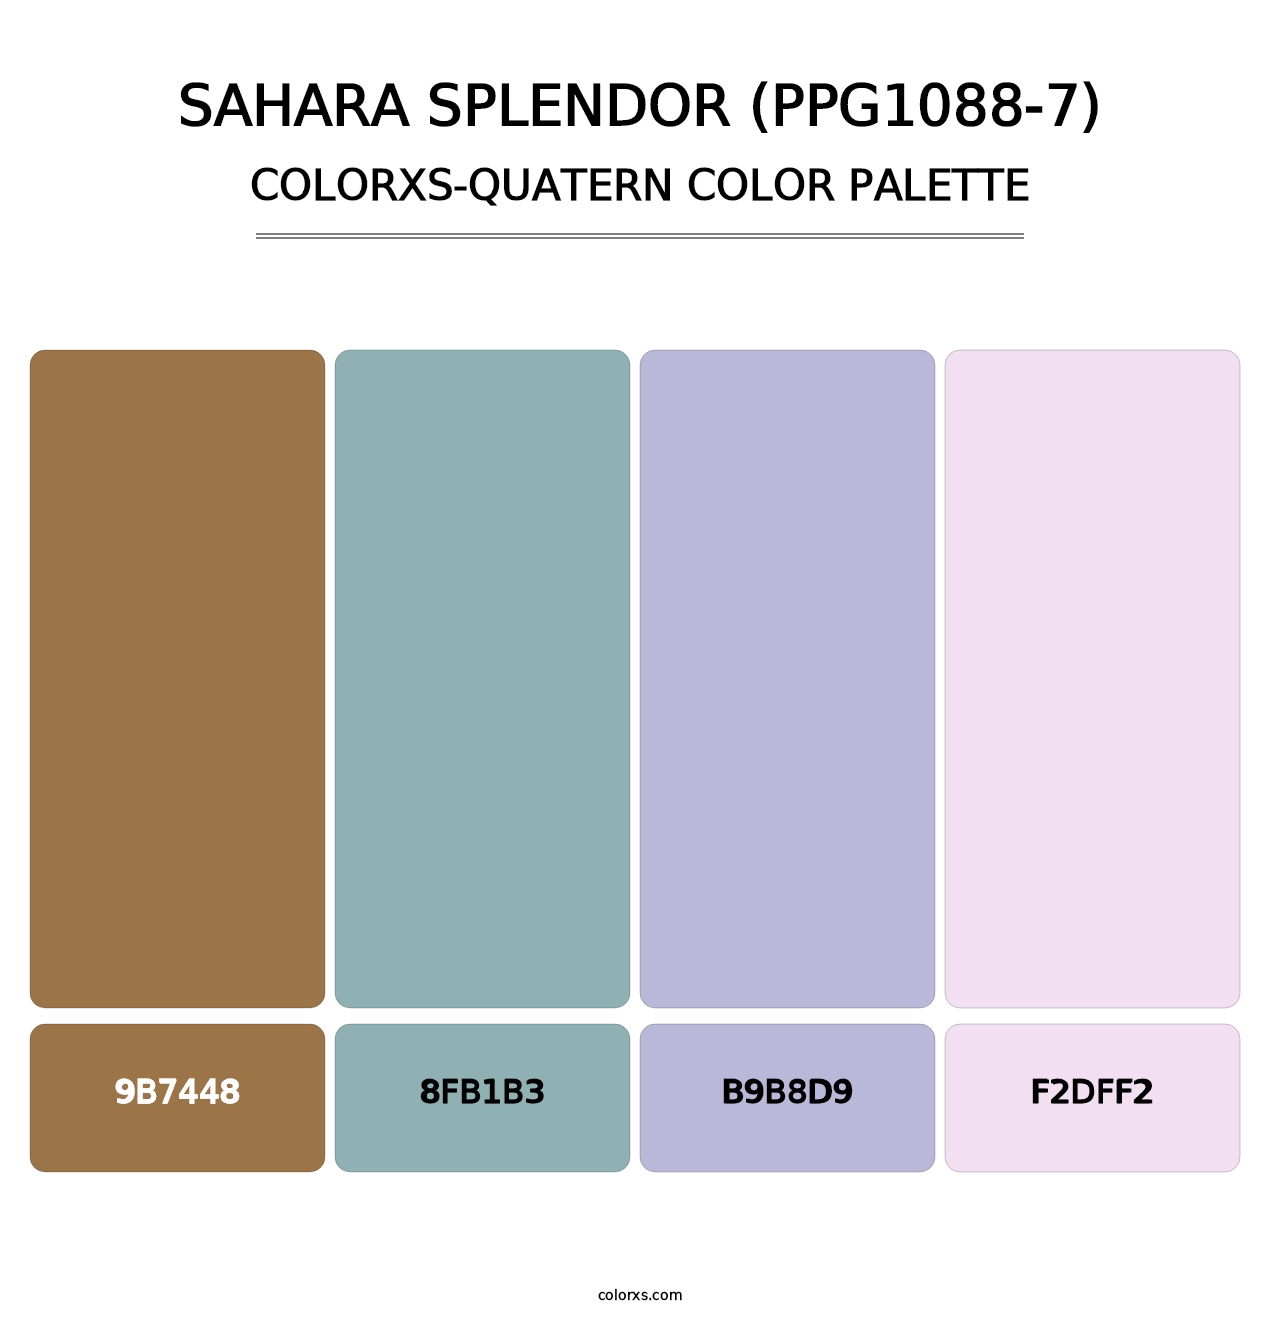 Sahara Splendor (PPG1088-7) - Colorxs Quatern Palette